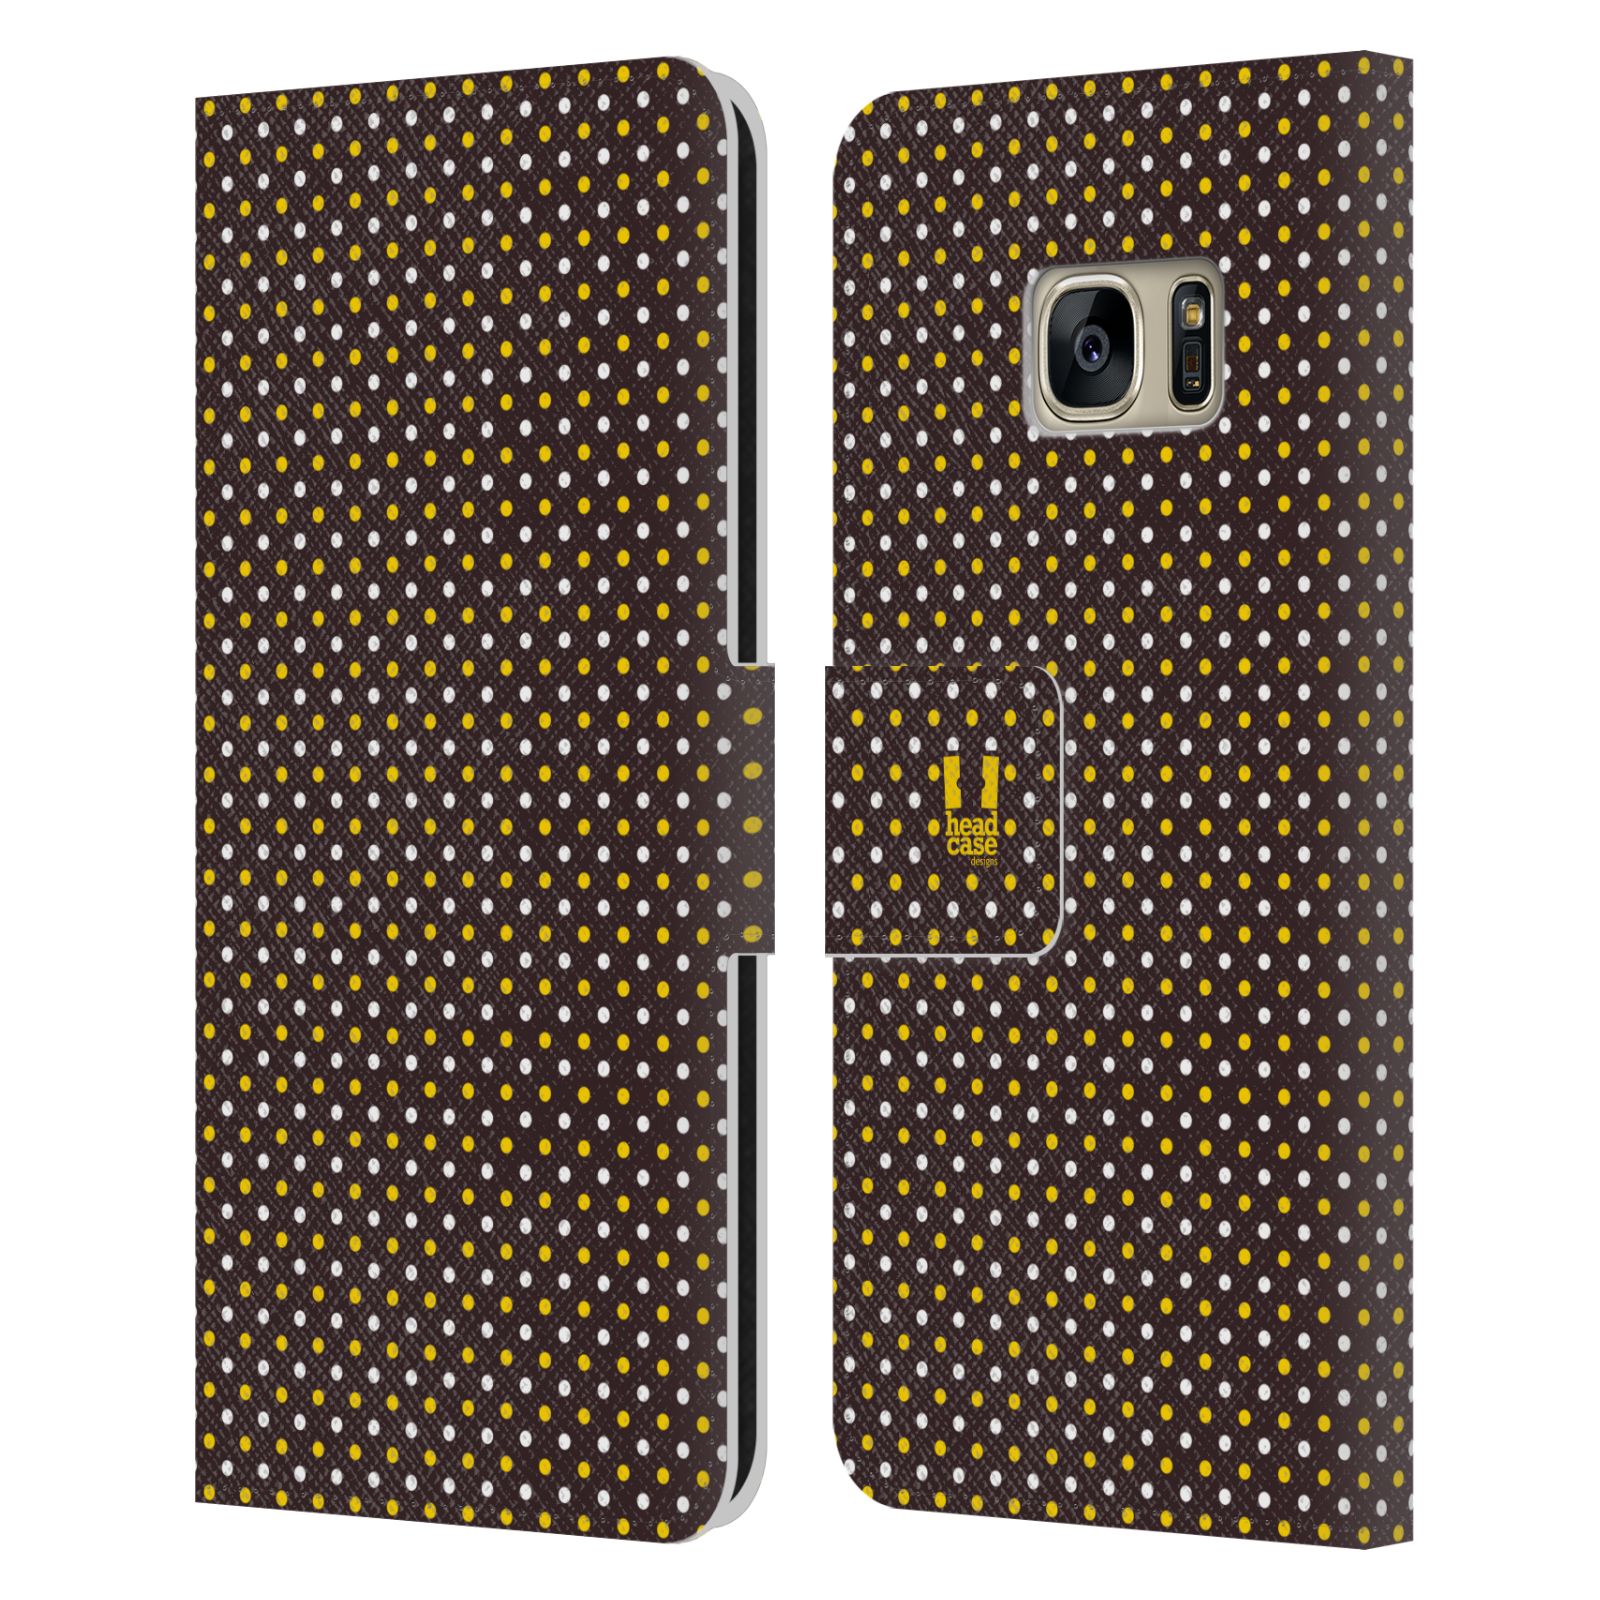 HEAD CASE Flipové pouzdro pro mobil Samsung Galaxy S7 (G9300) VČELÍ VZOR puntíky hnědá a žlutá